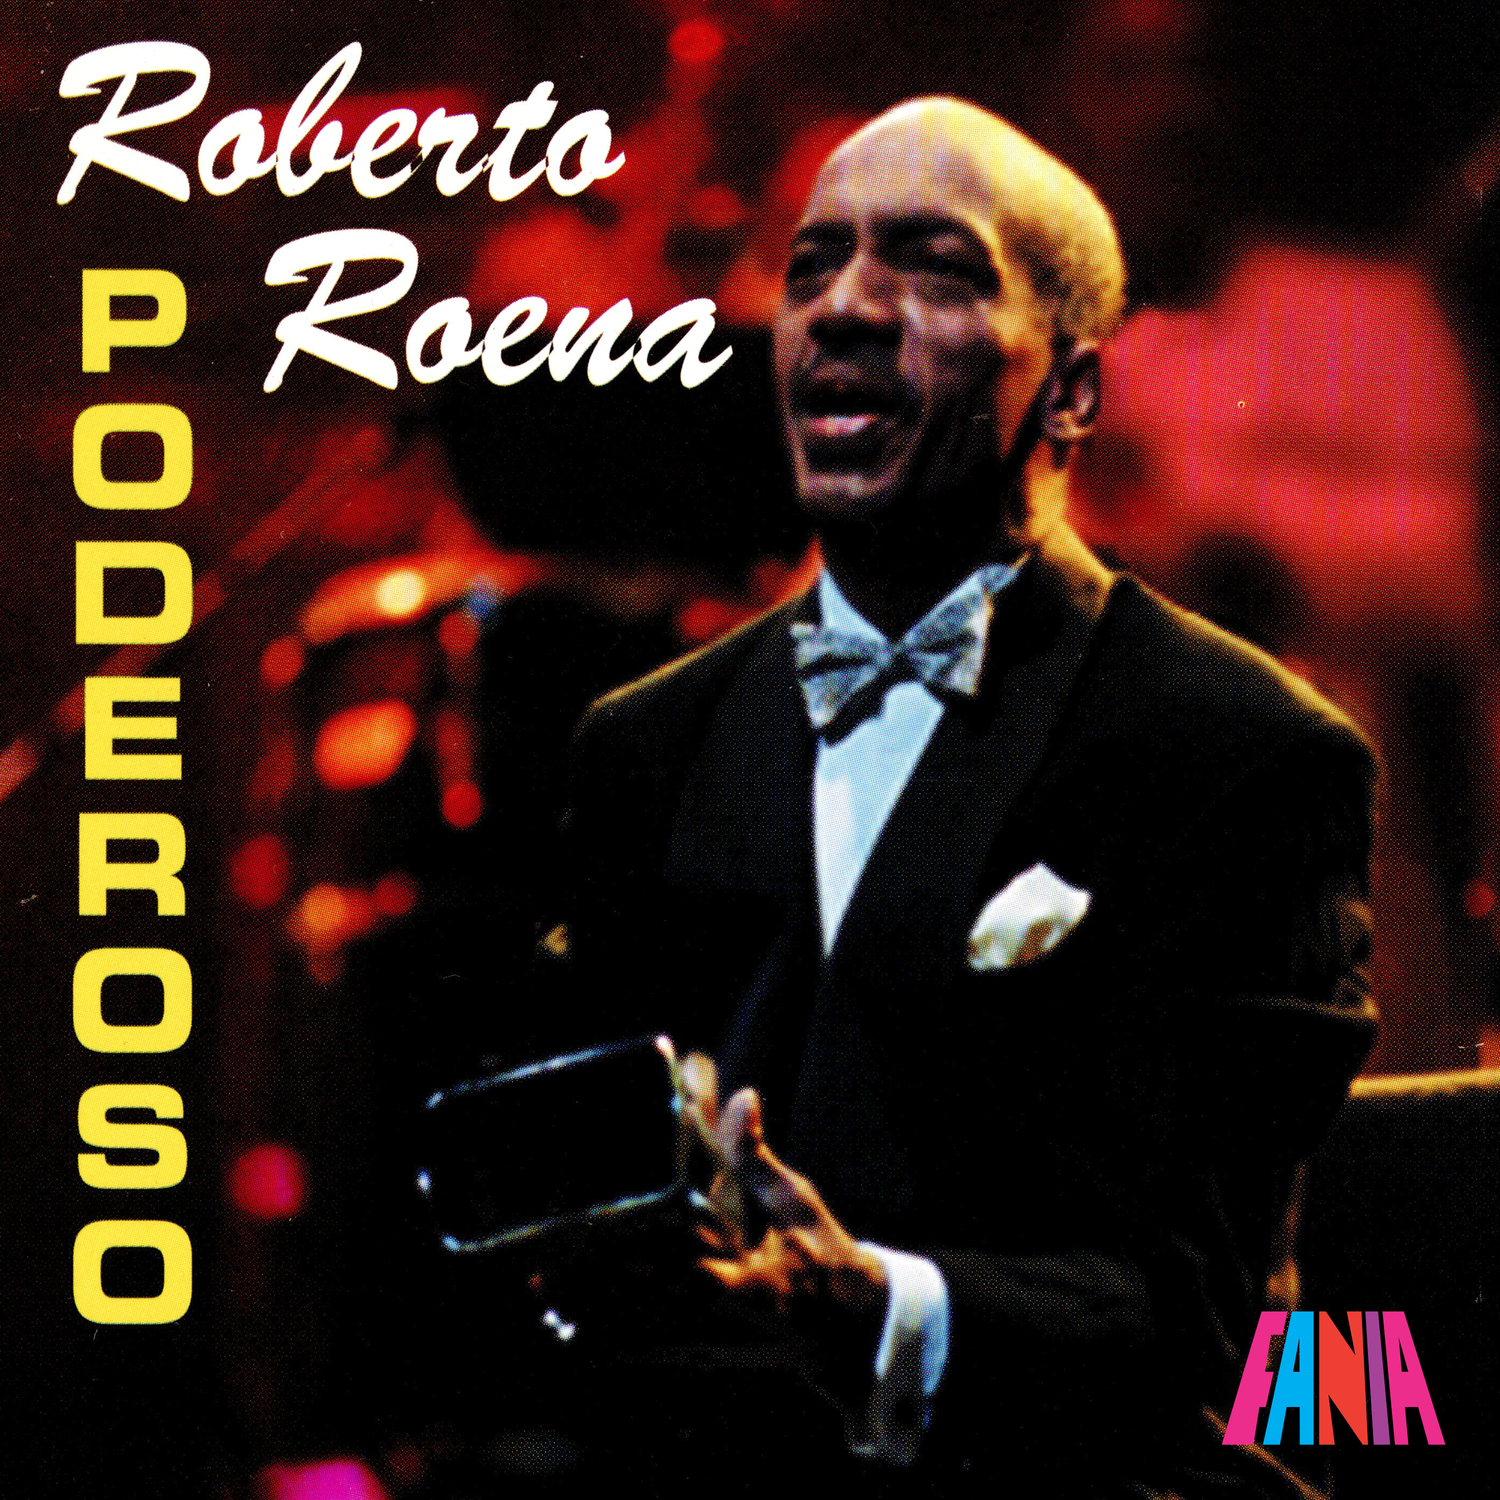 ROBERTO ROENA Y SUS MEGATONES LPレコード-